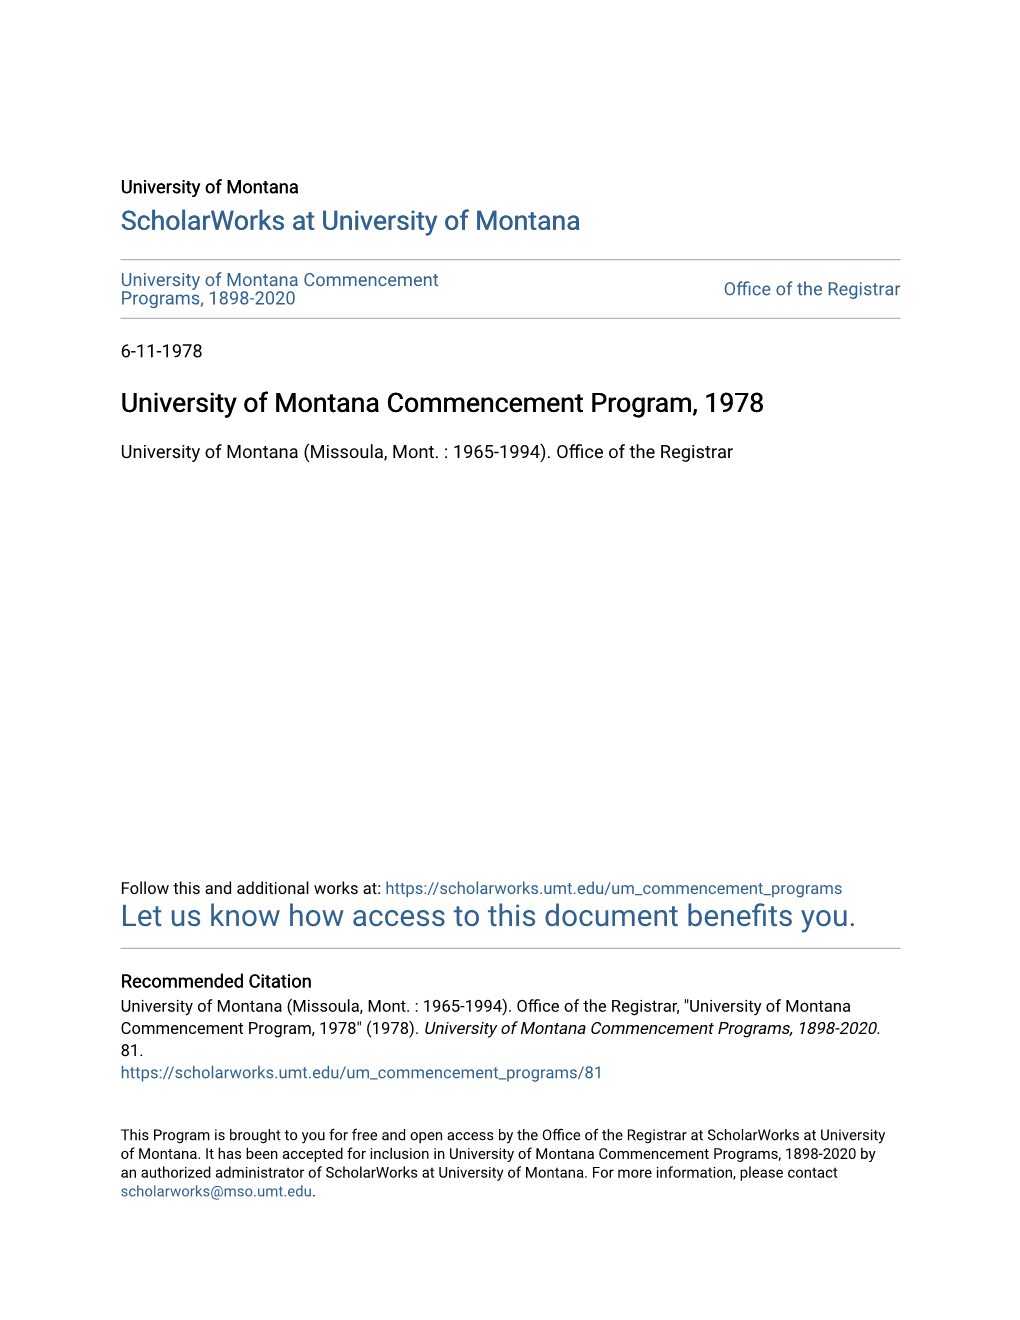 University of Montana Commencement Program, 1978